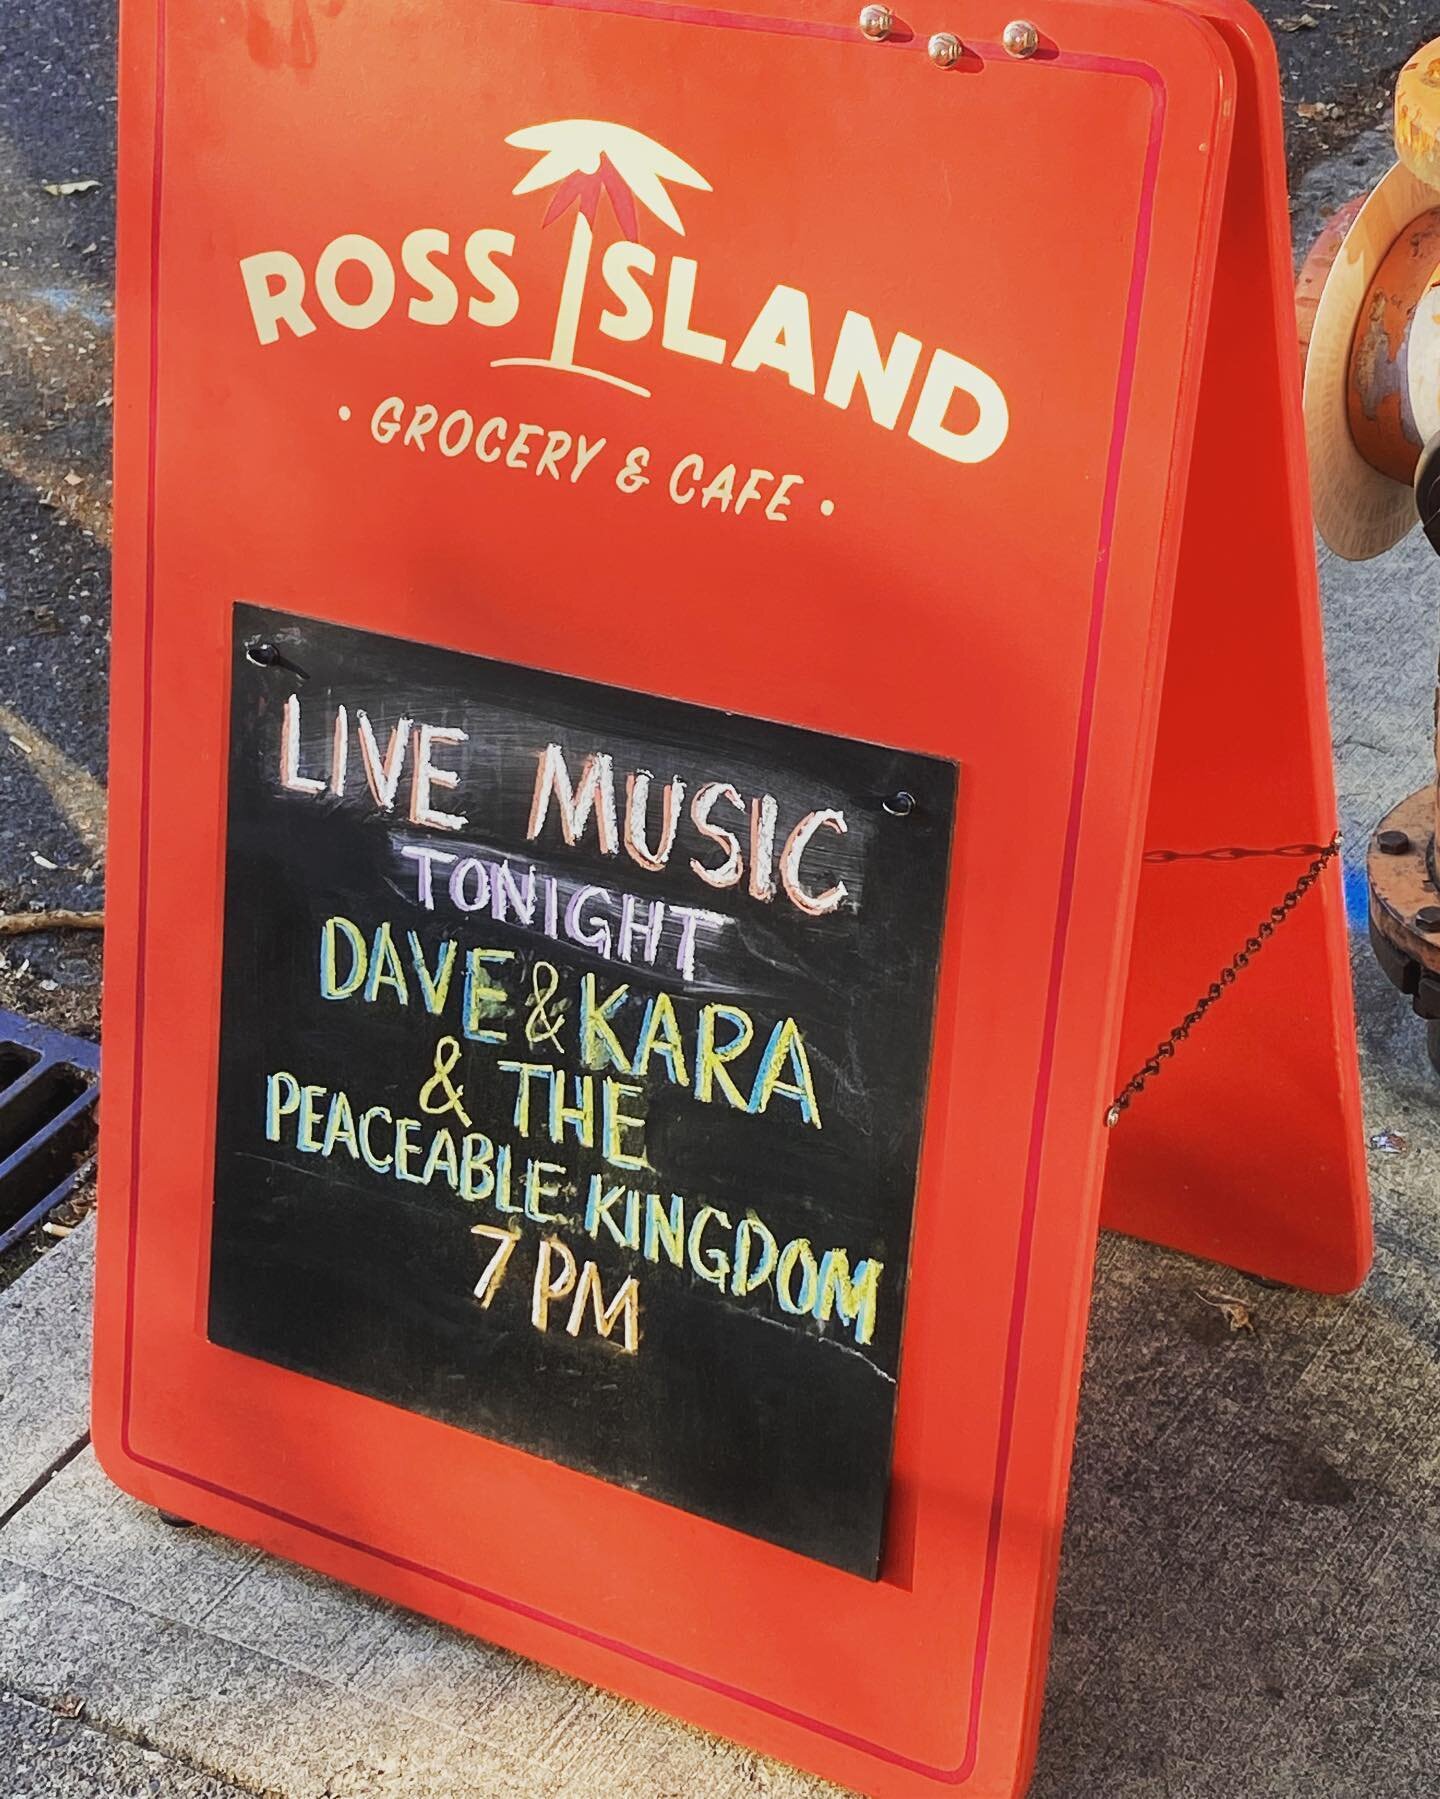 Tonight! 
#daveandkara #livemusic #portlandoregon #songwriter #folkpop #folkrock #thedreamers #rossislandcafe #friday